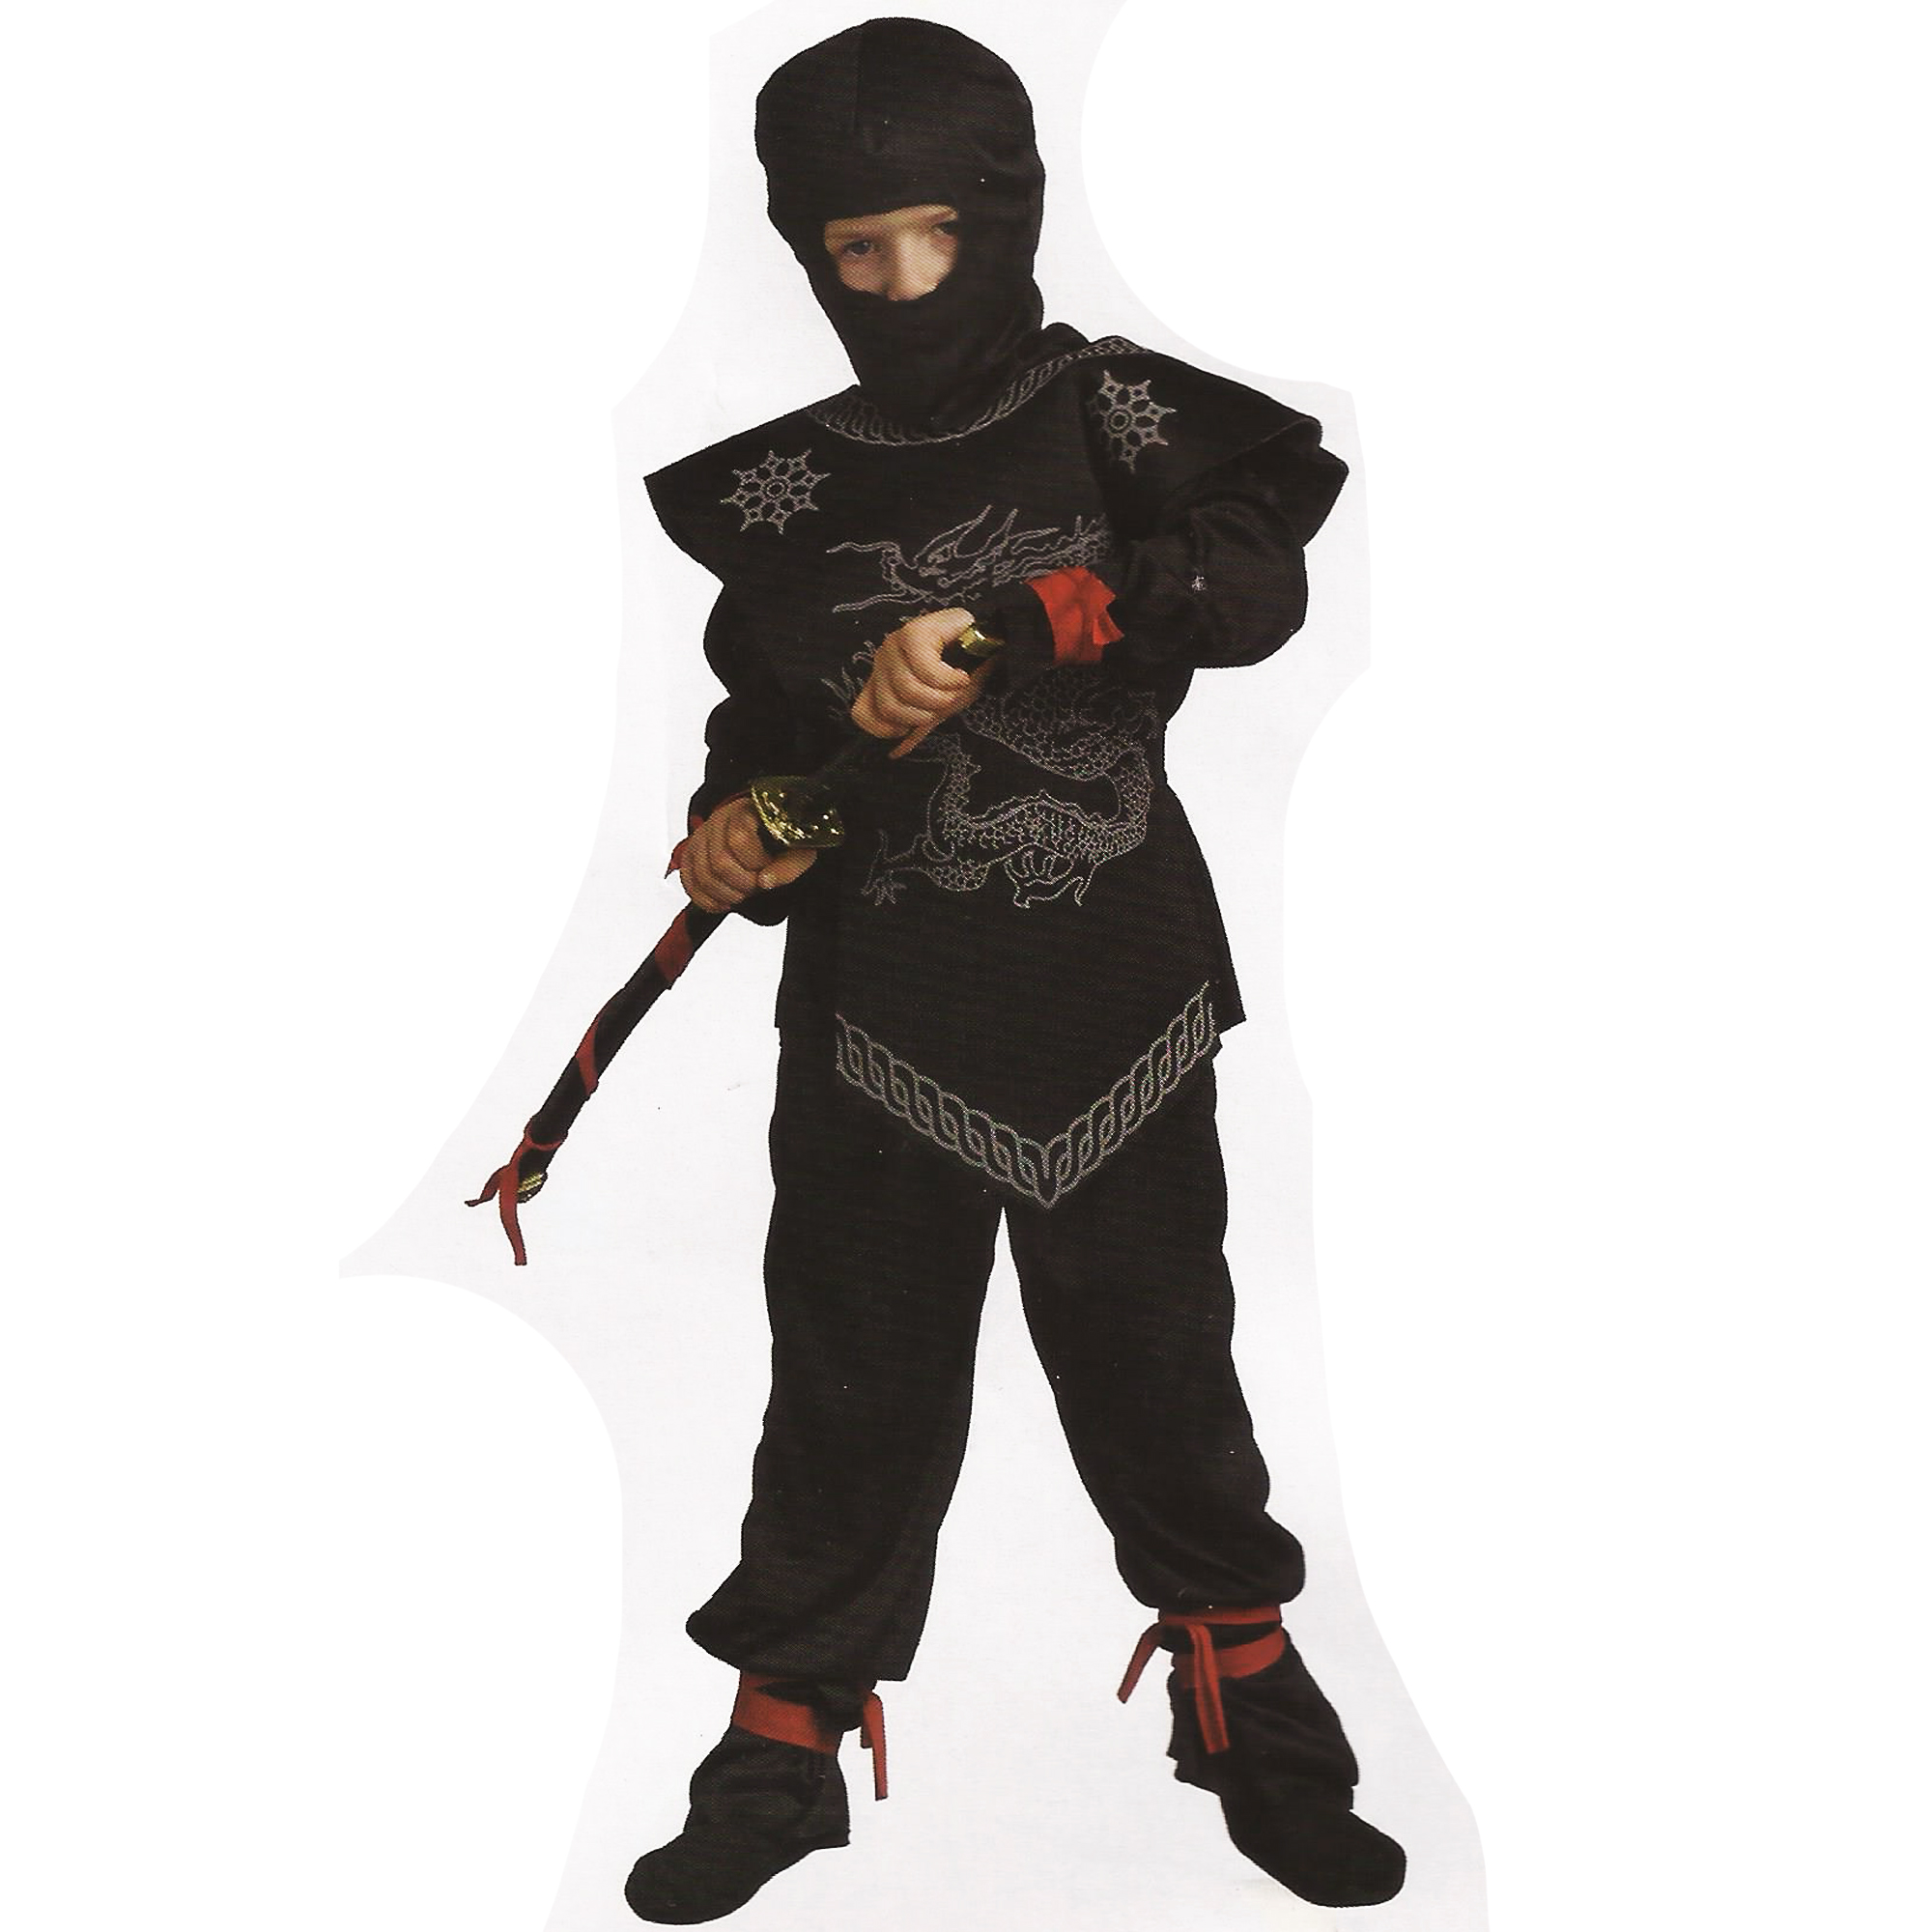 Northlight Black and Gray Ninja Boys Children's Halloween Costume - Large 7-9